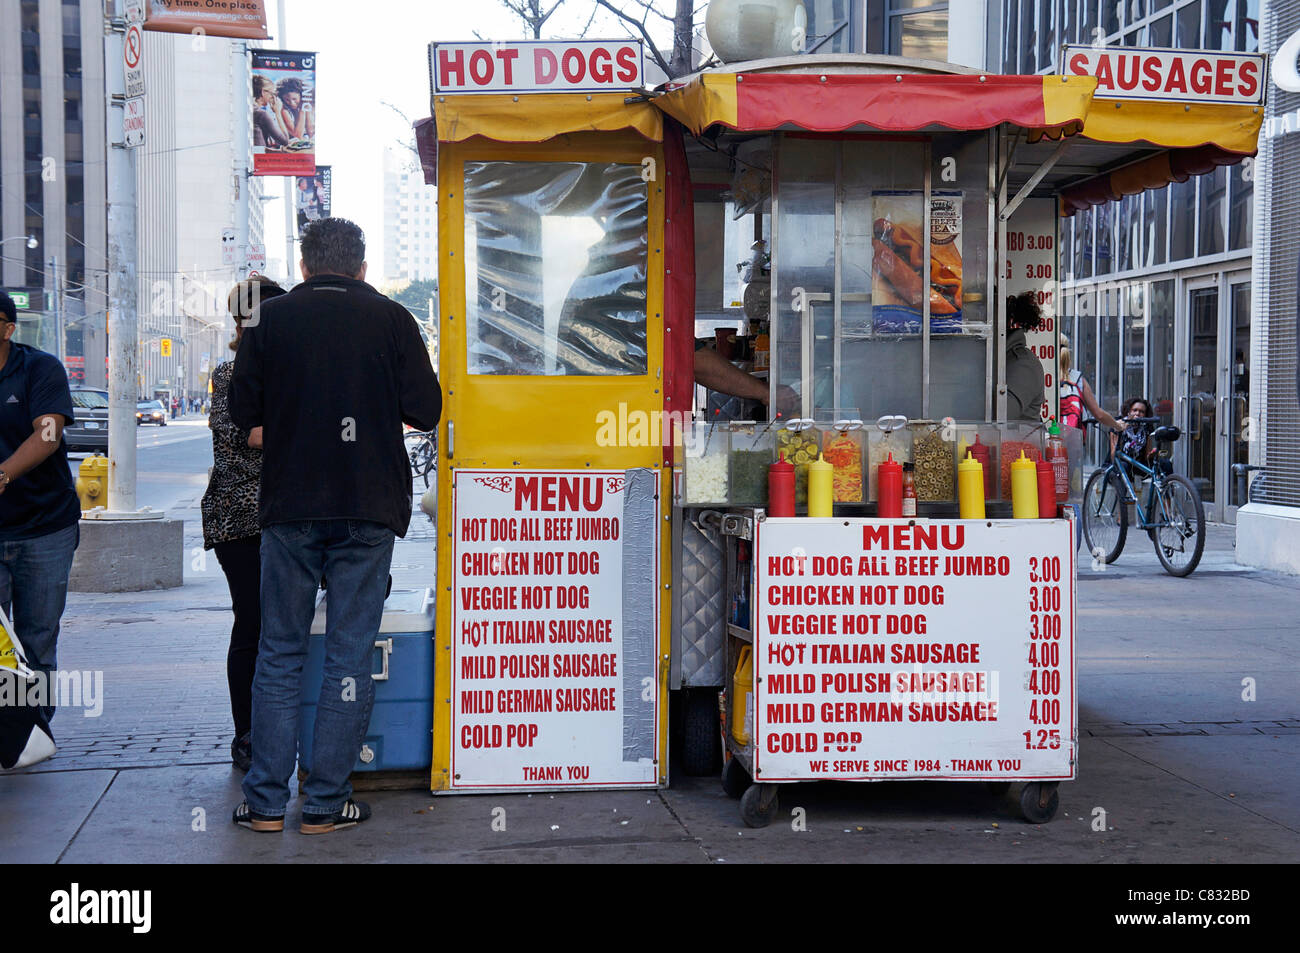 Hot Dog Vendor, Stand Foto stock - Alamy